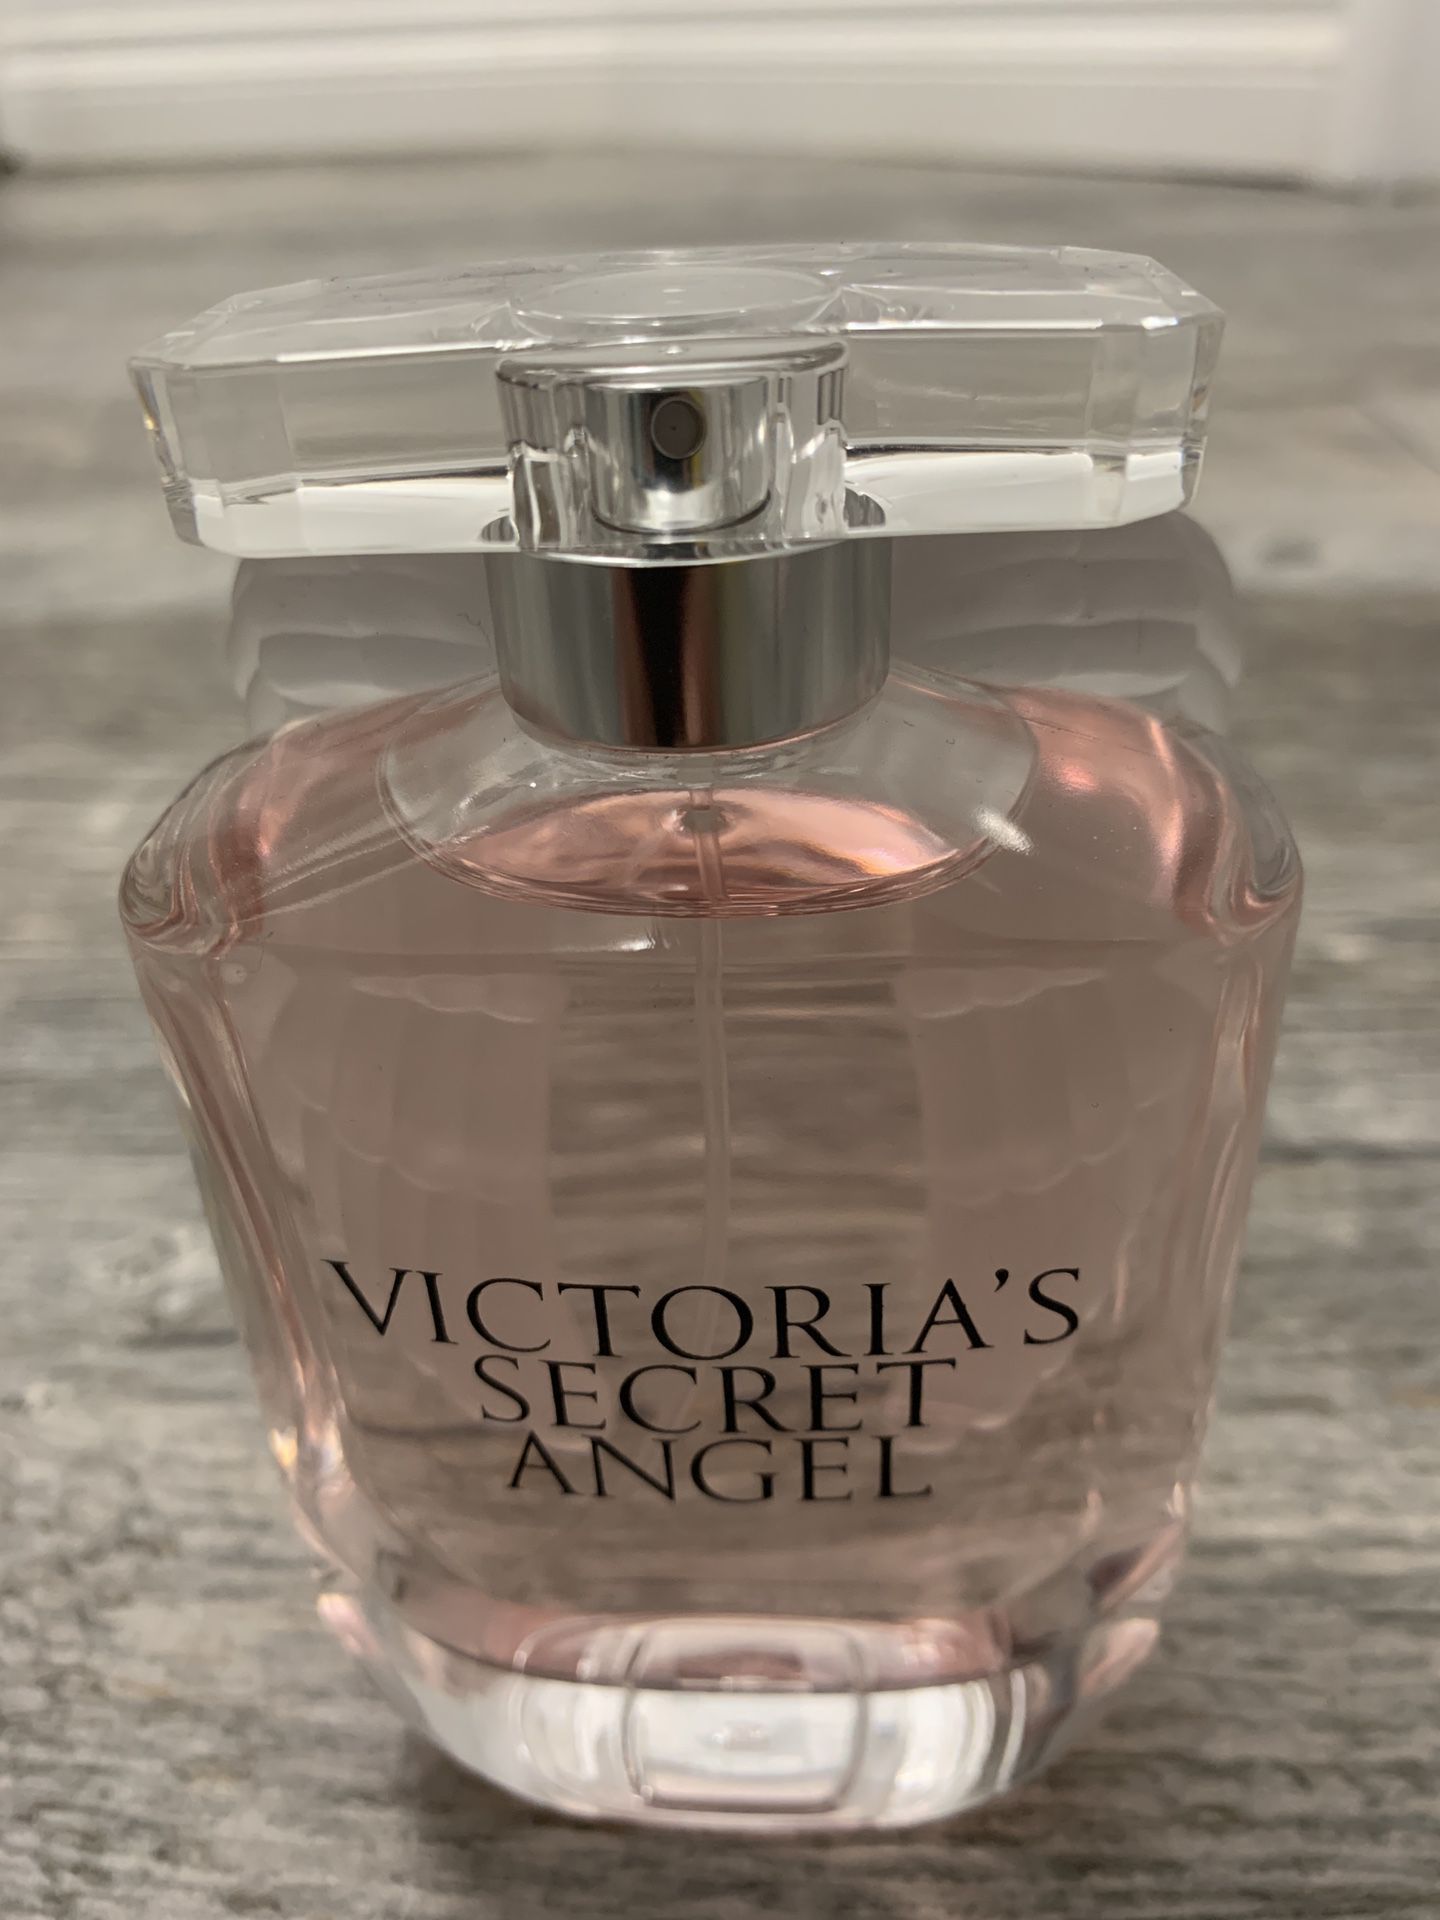 Victoria’s Secret Angel perfume